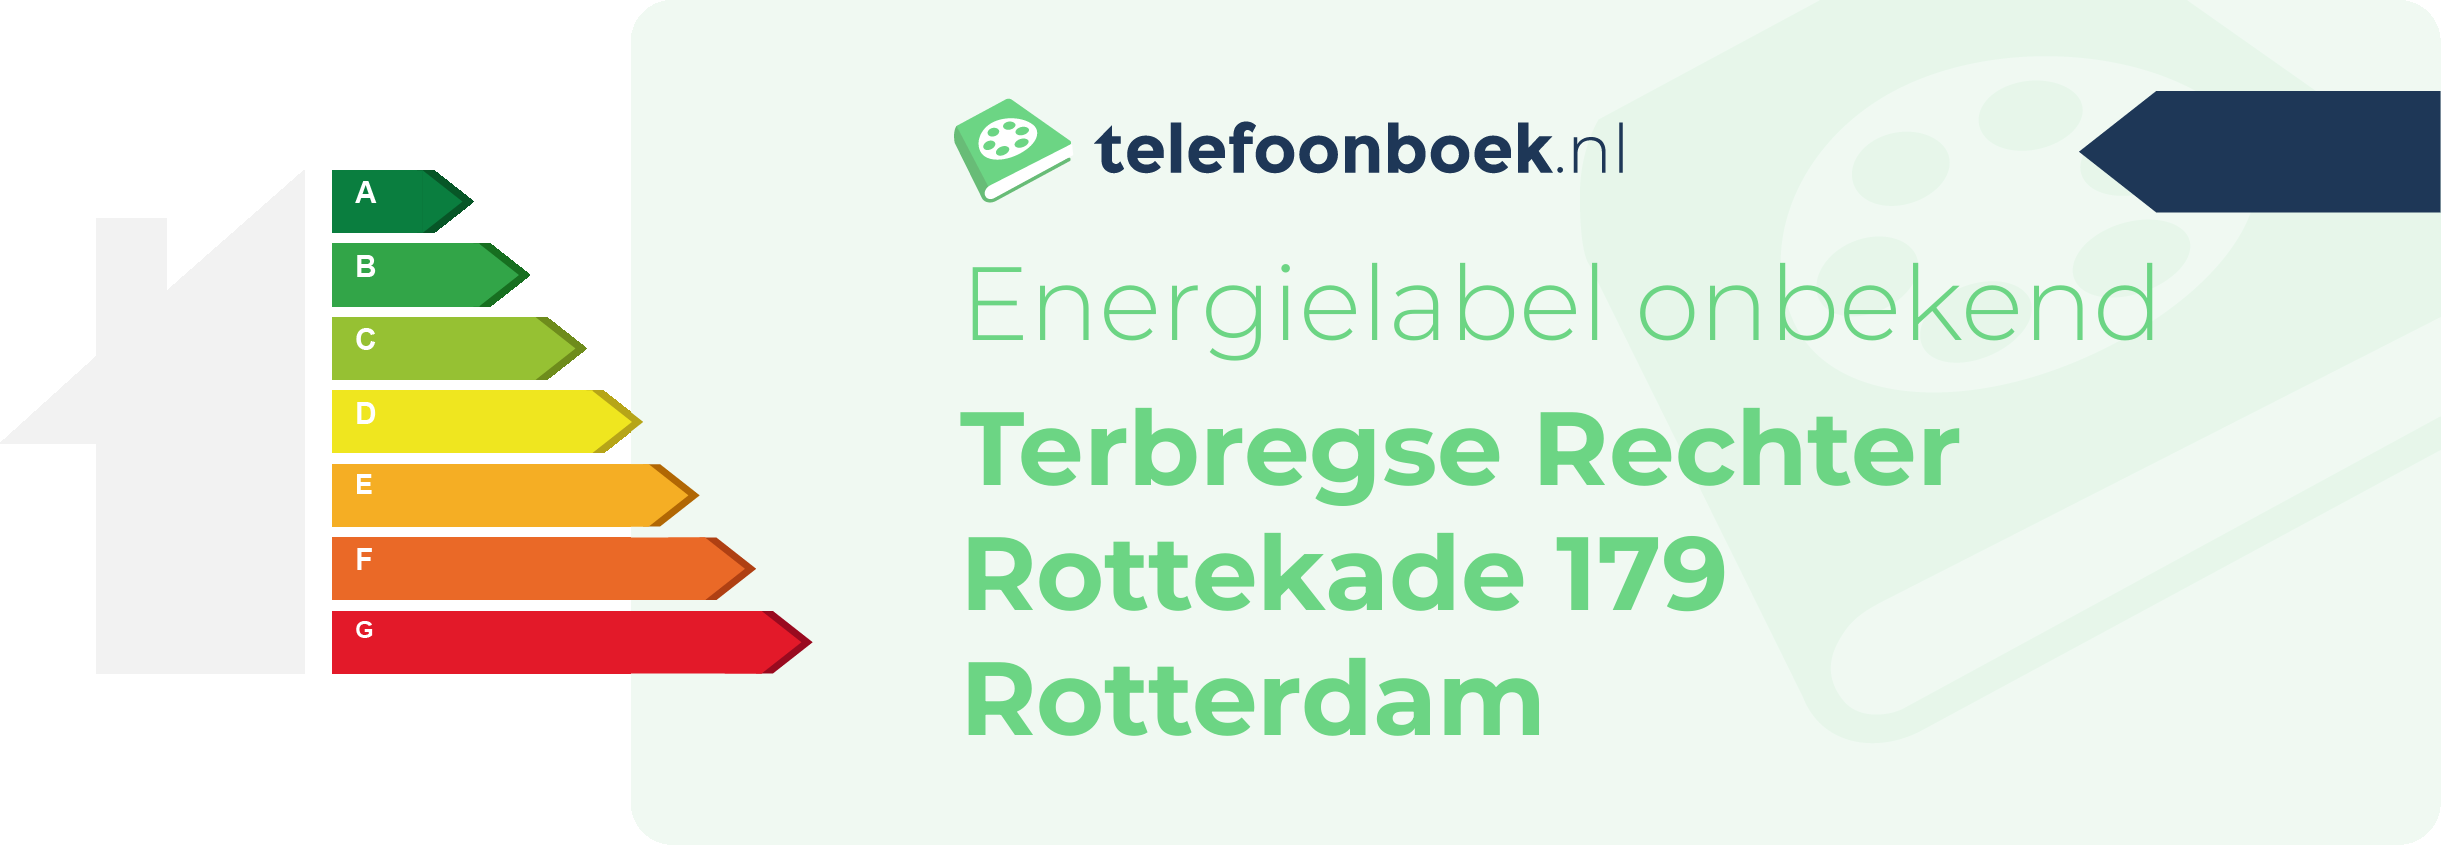 Energielabel Terbregse Rechter Rottekade 179 Rotterdam